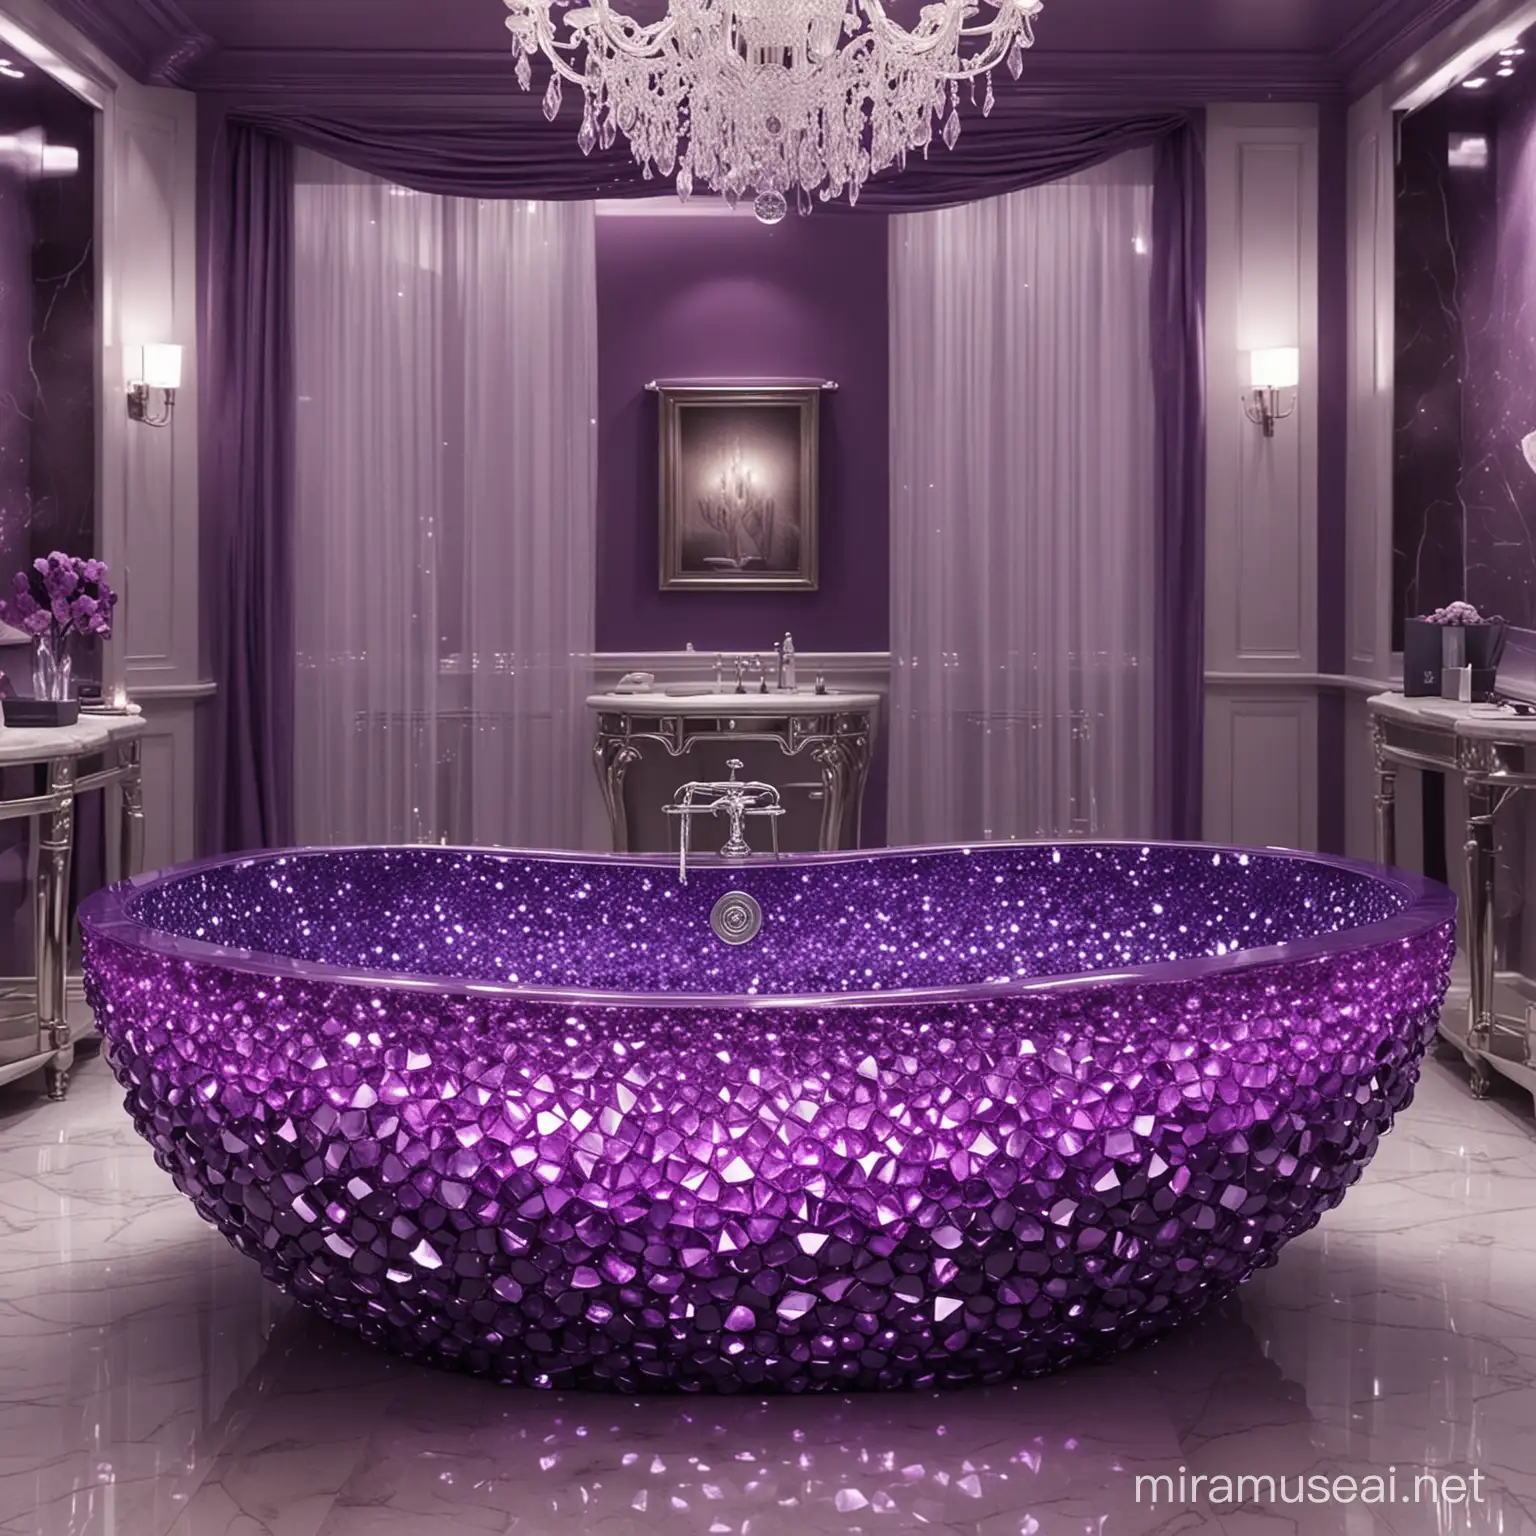 Luxurious Bath with Purple Crystal Tub